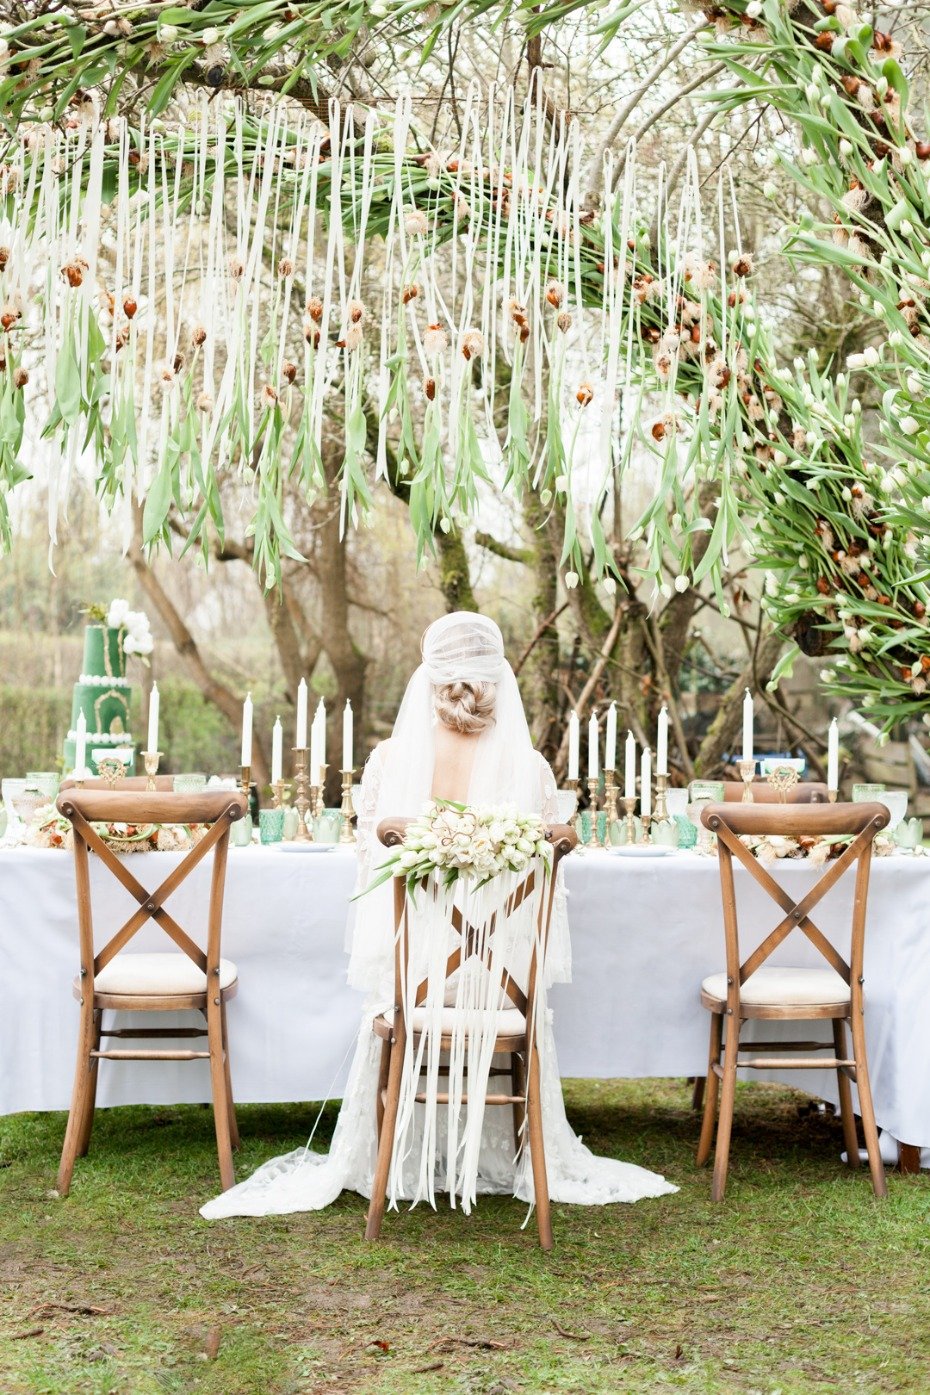 Tulip Mania inspired wedding ideas